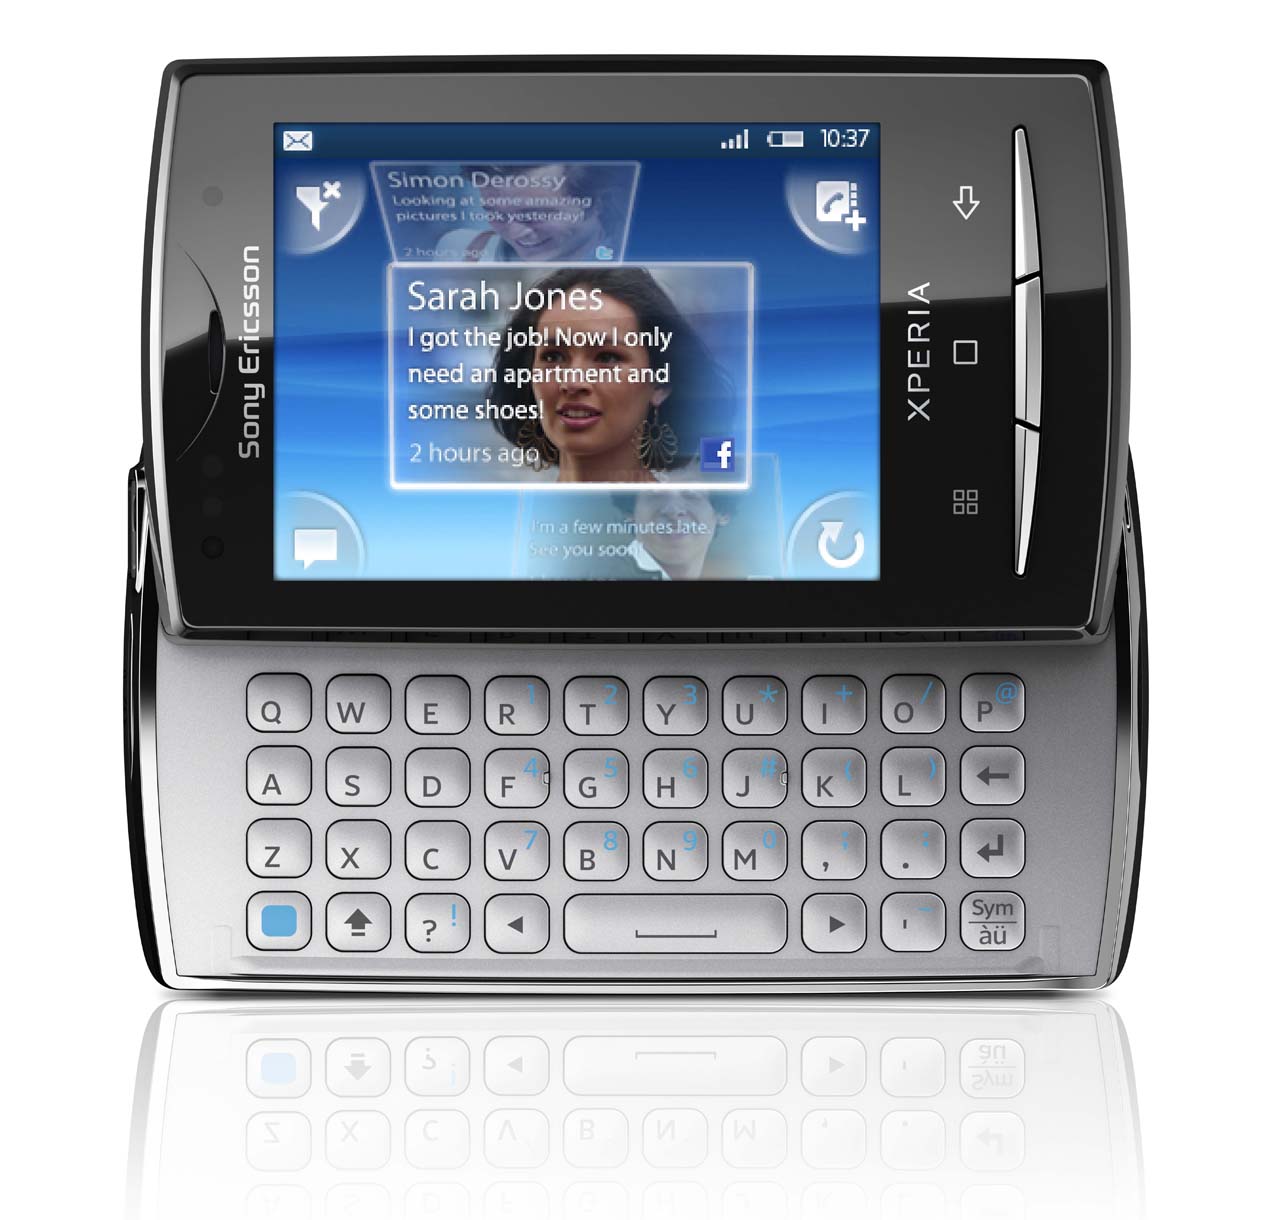 Sony-Ericsson Xperia X10 mini pro ringtones free download.